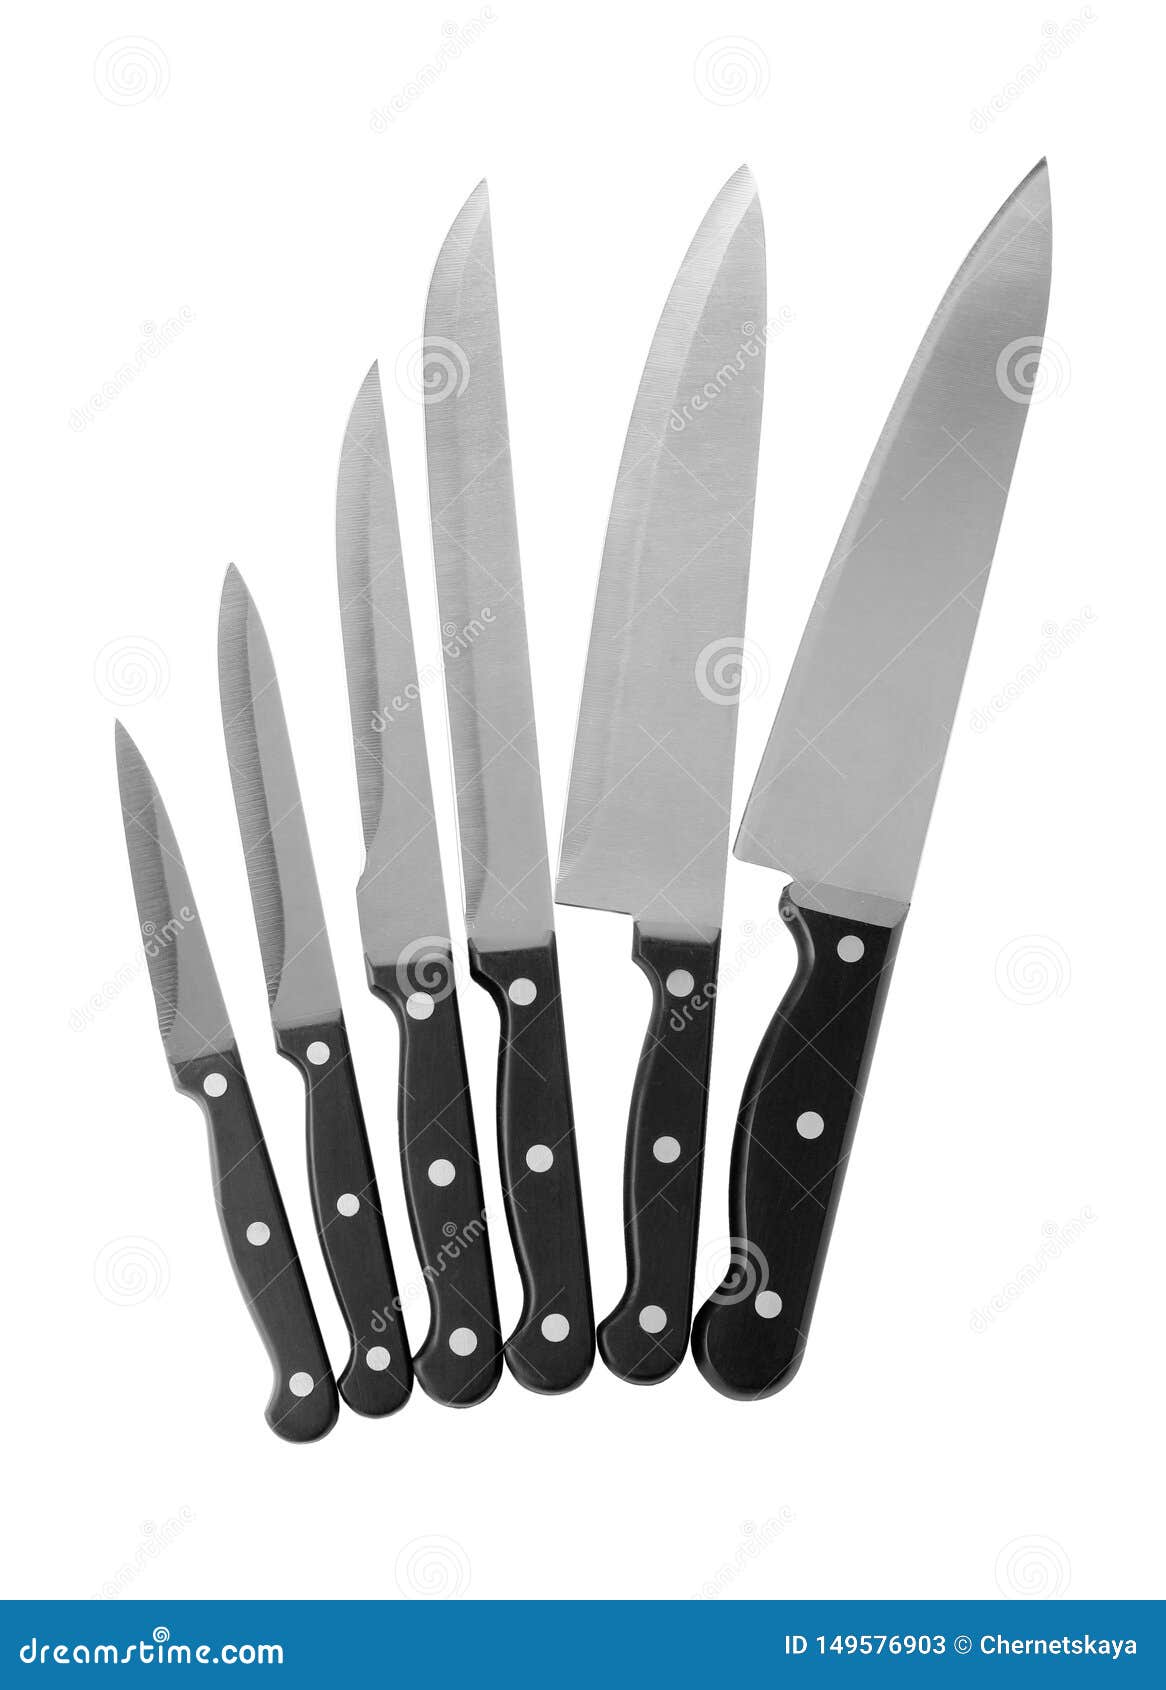 set of sharp knives on white background